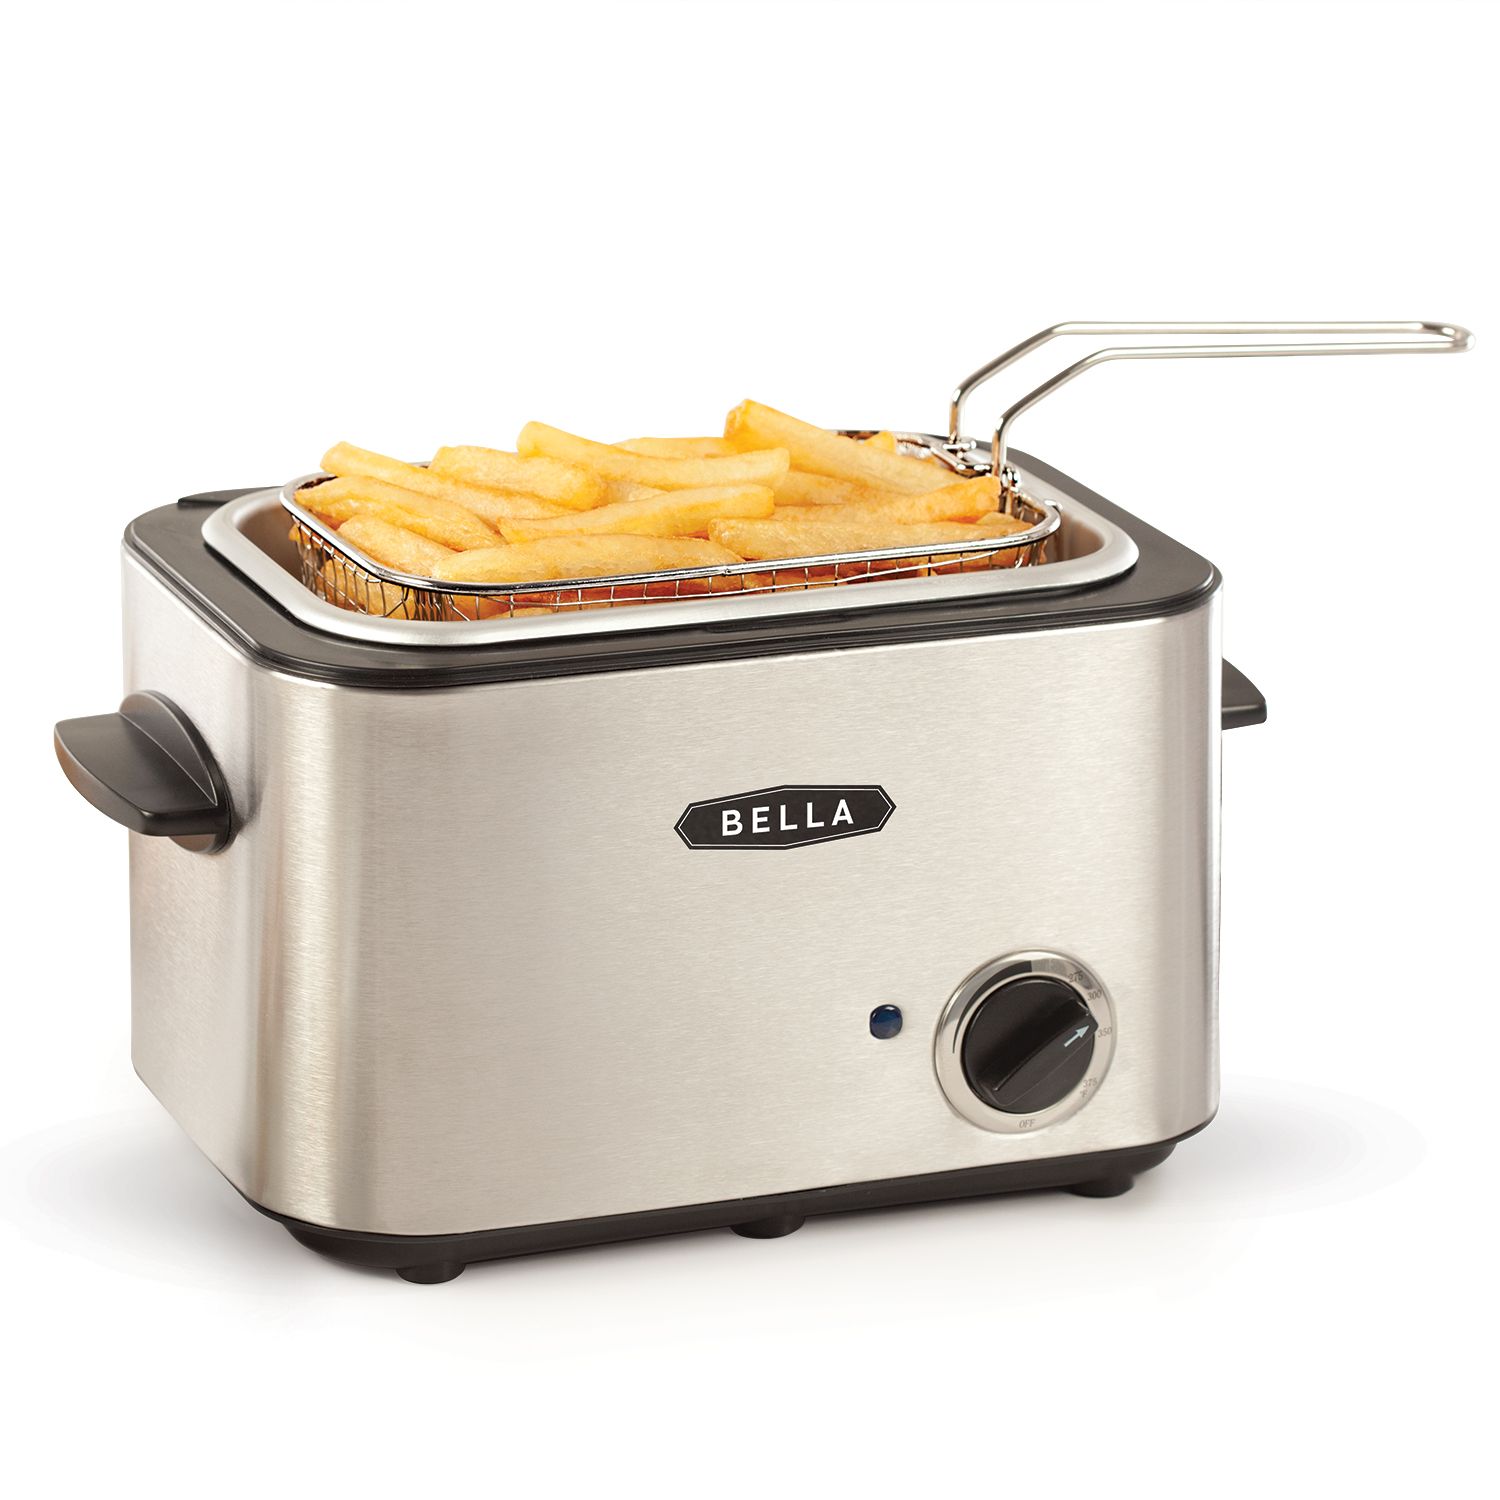 bella-1-2l-deep-fryer-stainless-steel-appliances-small-kitchen